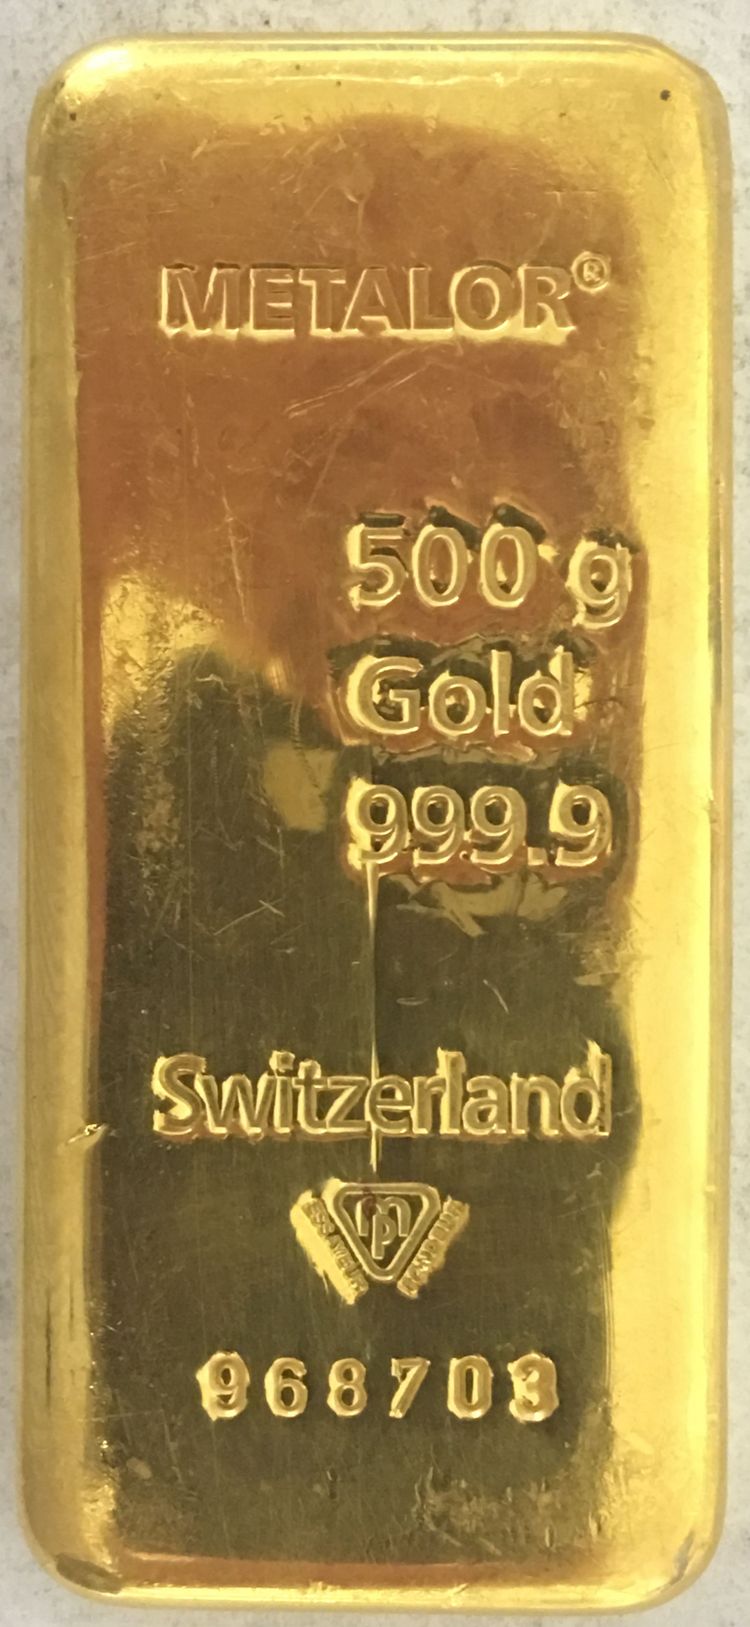 500g Goldbarren Metalor